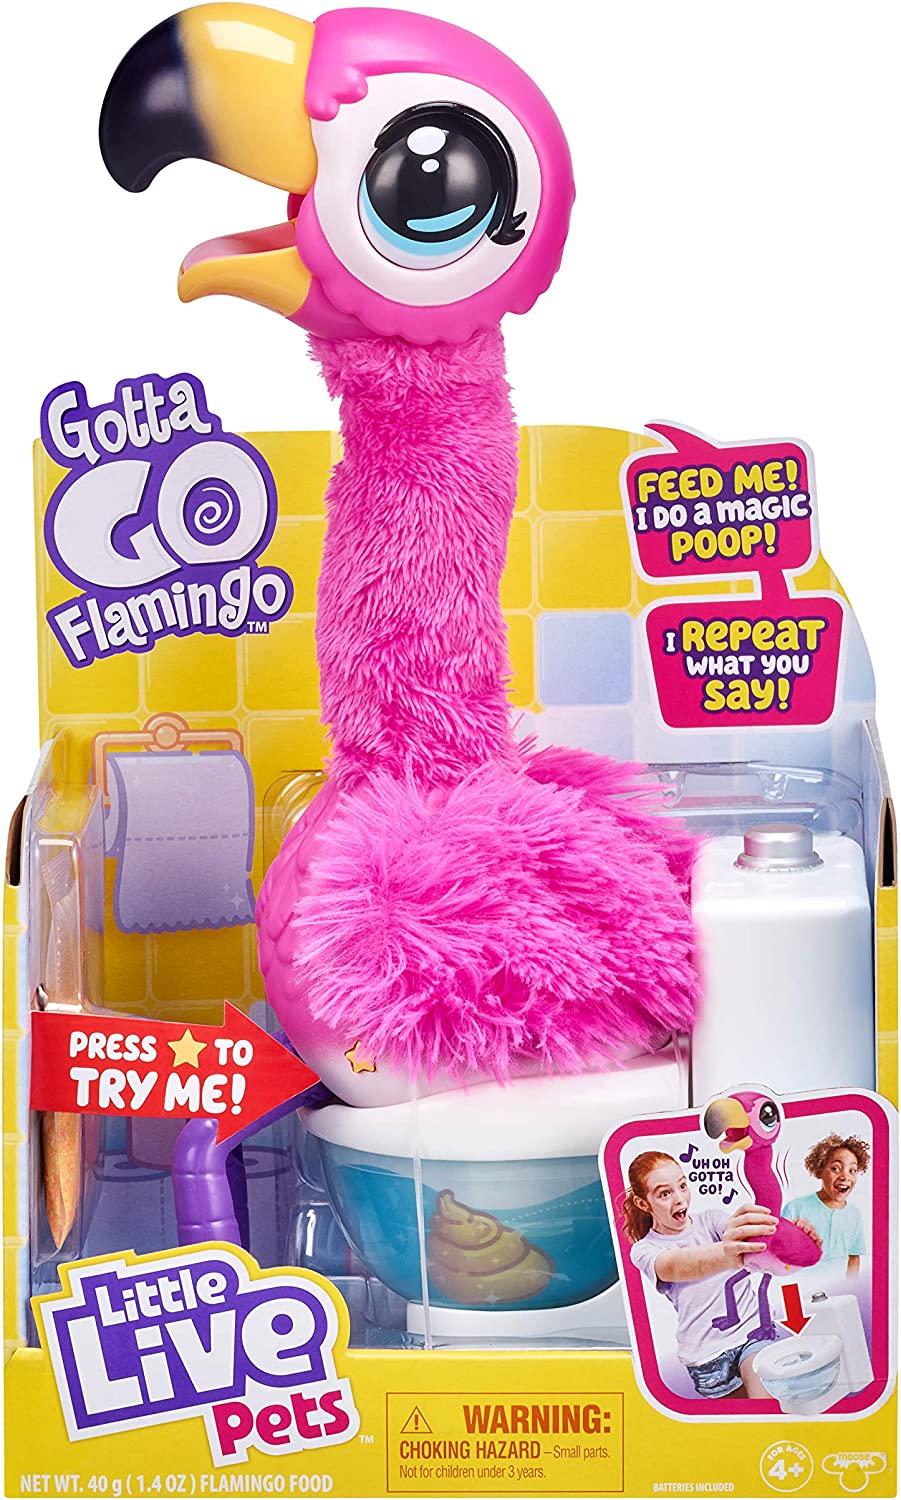 Gotta Go Flamingo toy by Little Live Pets